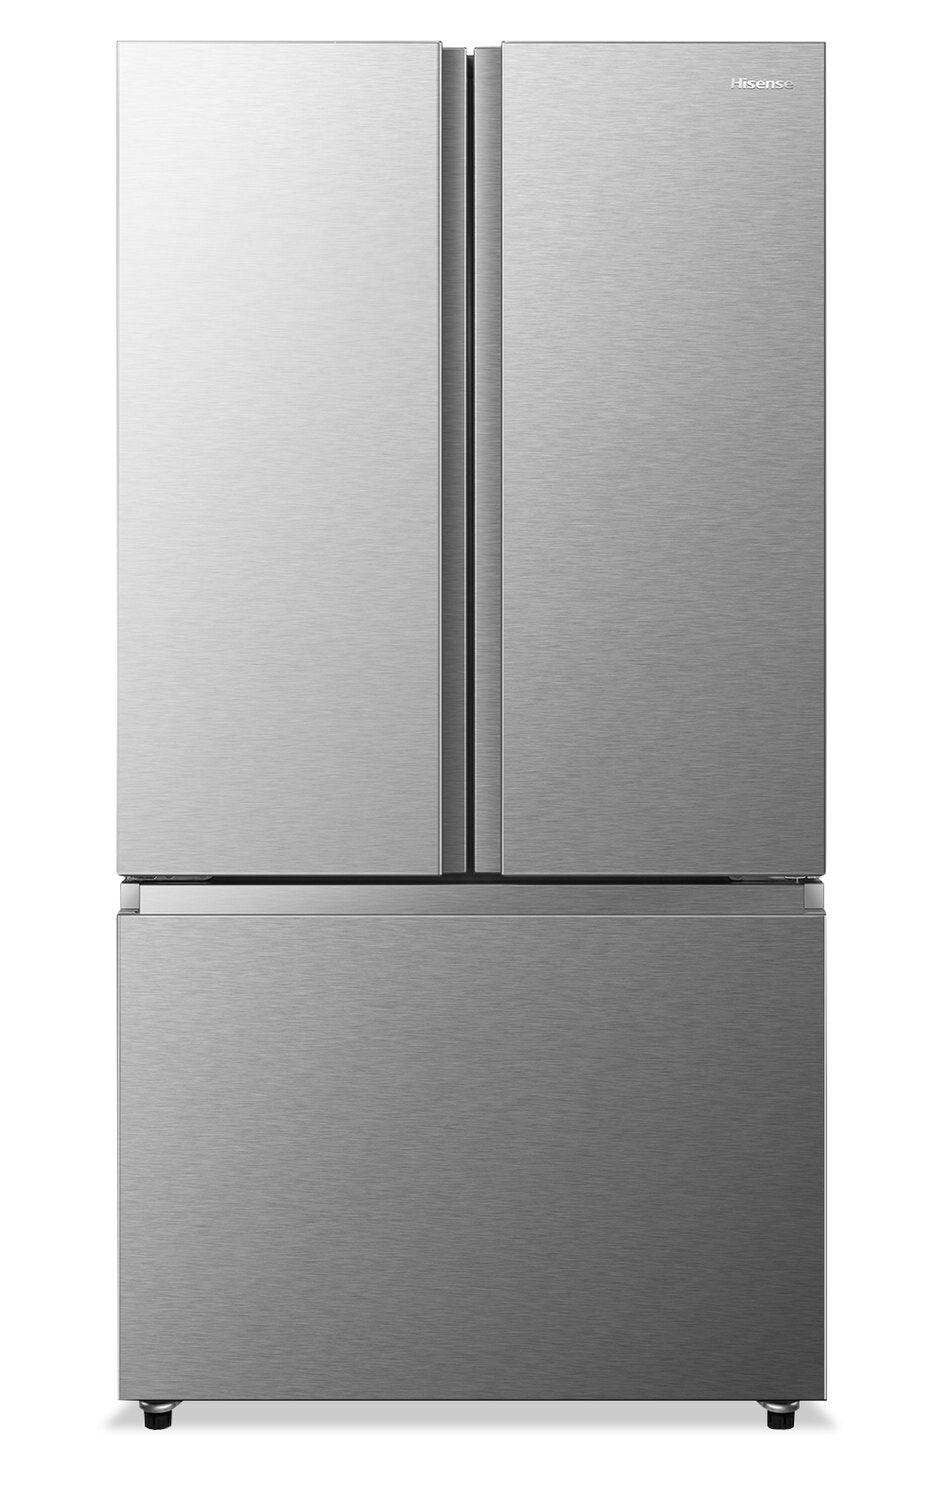 Hisense 22.5 Cu. Ft. Counter-Depth French-Door Refrigerator ...